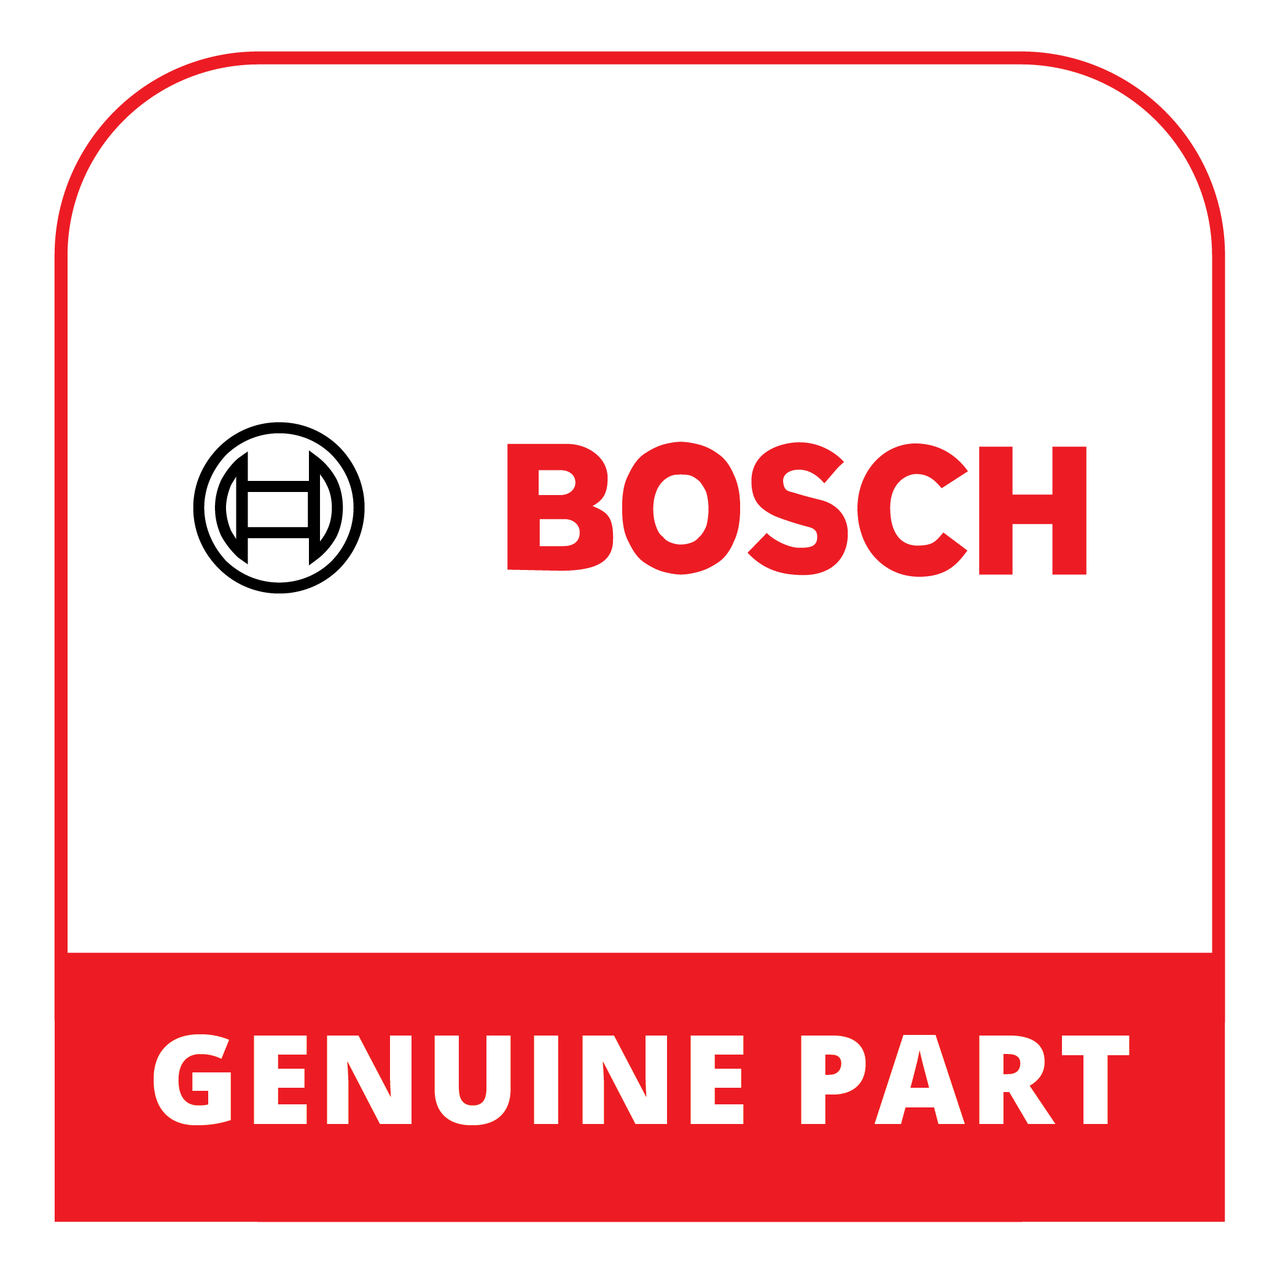 Bosch (Thermador) 20001318 - Shelf - Genuine Bosch (Thermador) Part